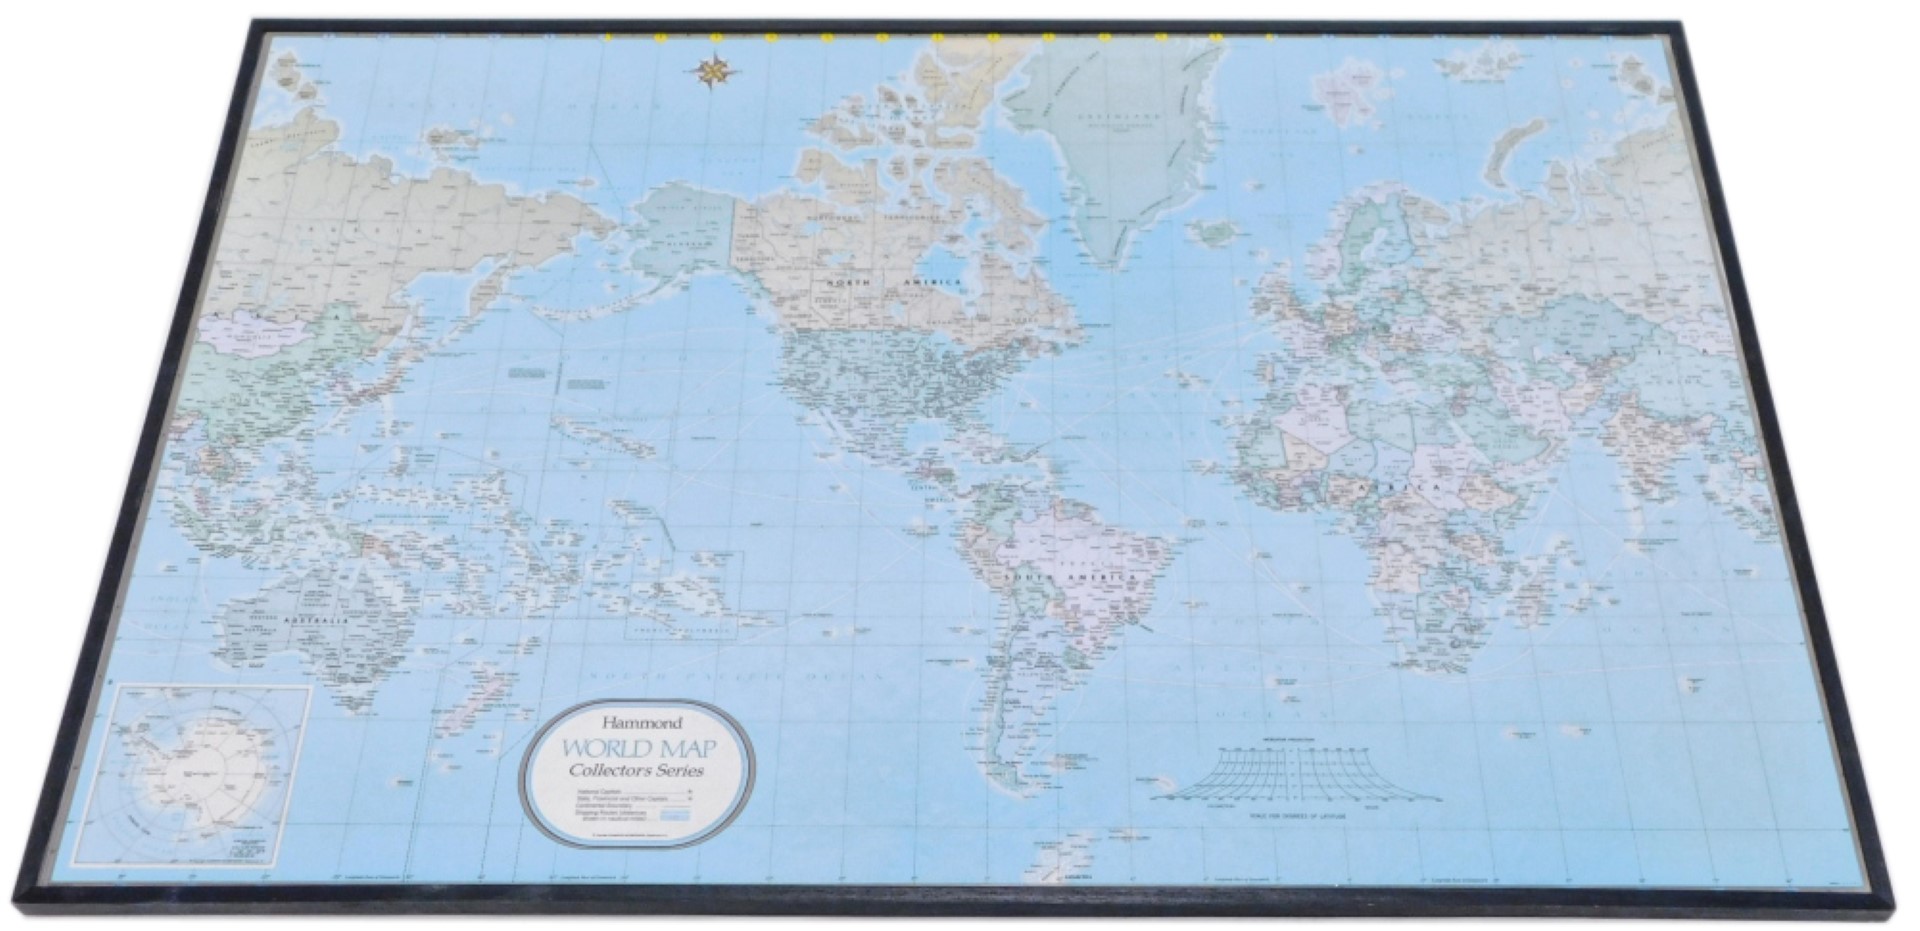 A Hammond World Map Collectors Series framed wall map.